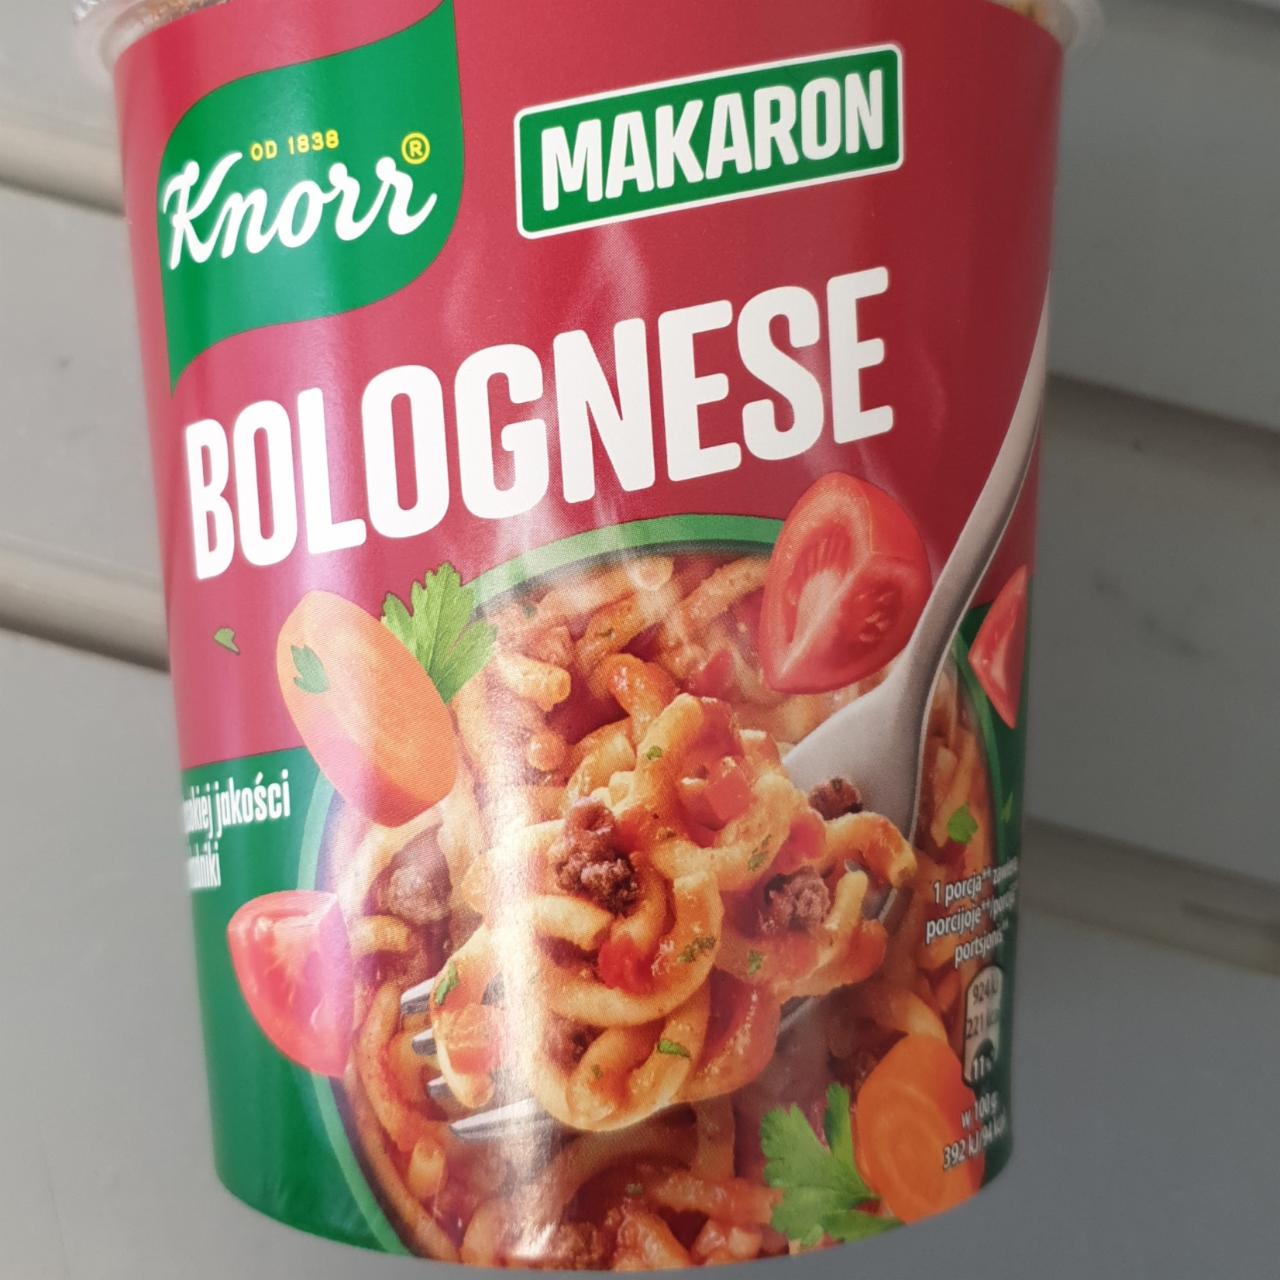 Zdjęcia - Makaron bolognese Knorr